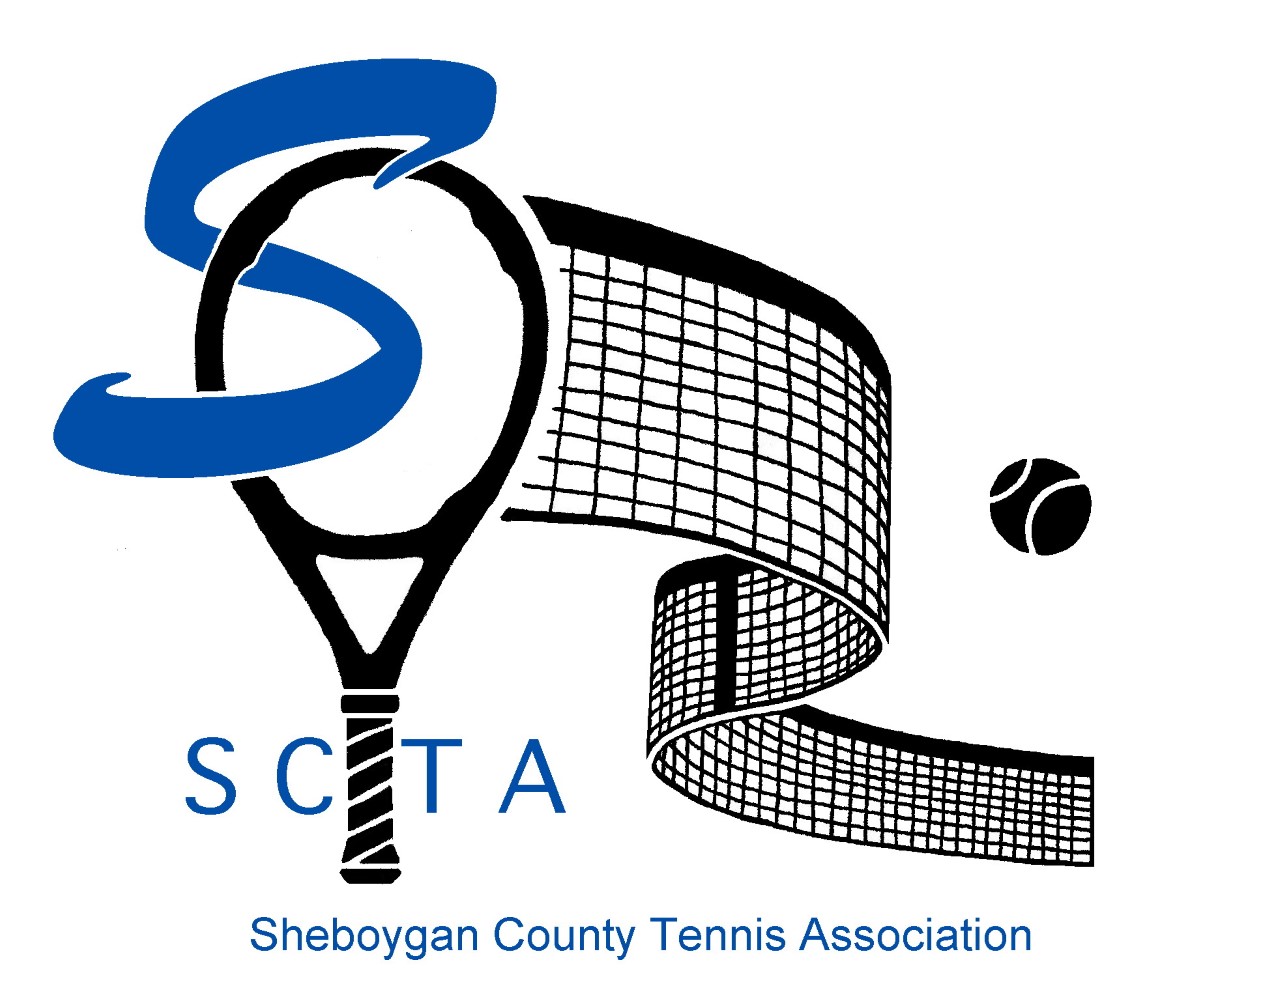 Sheboygan County Tennis Association logo